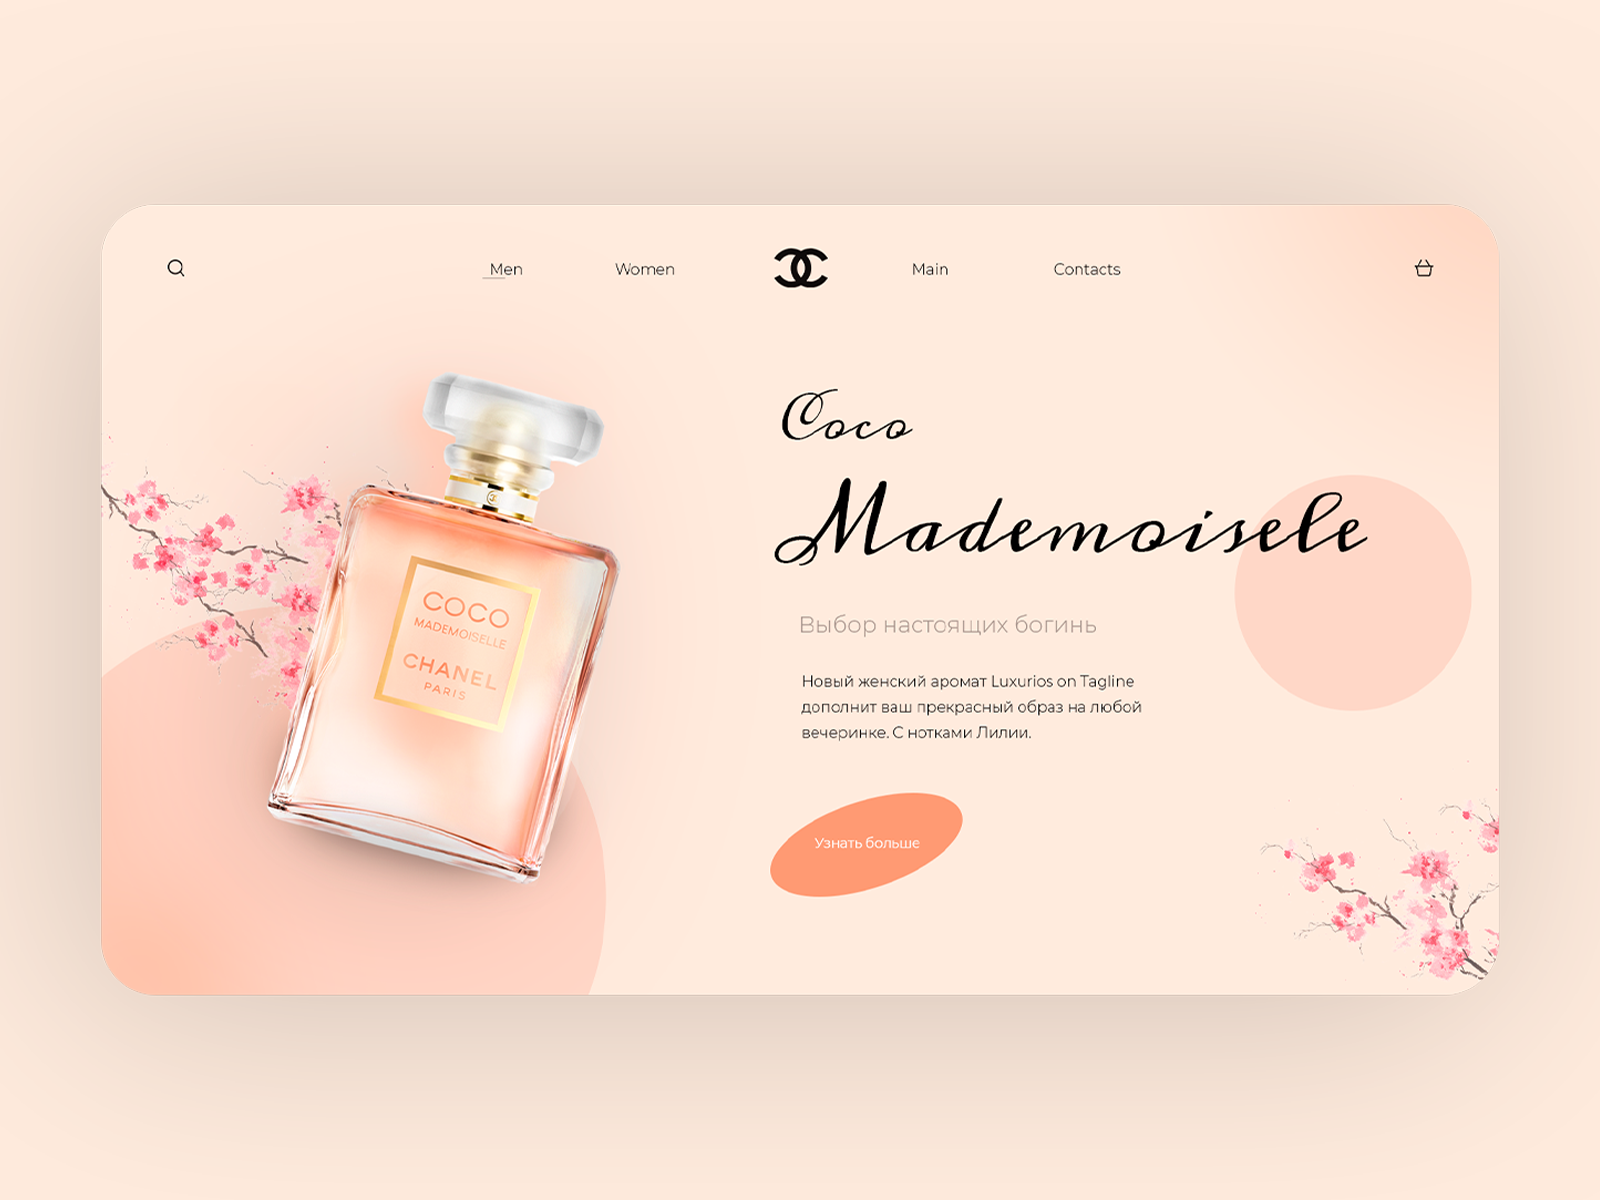 Chanel Coco Mademoiselle Perfume  Website UI Design by Karina Kuatova on  Dribbble